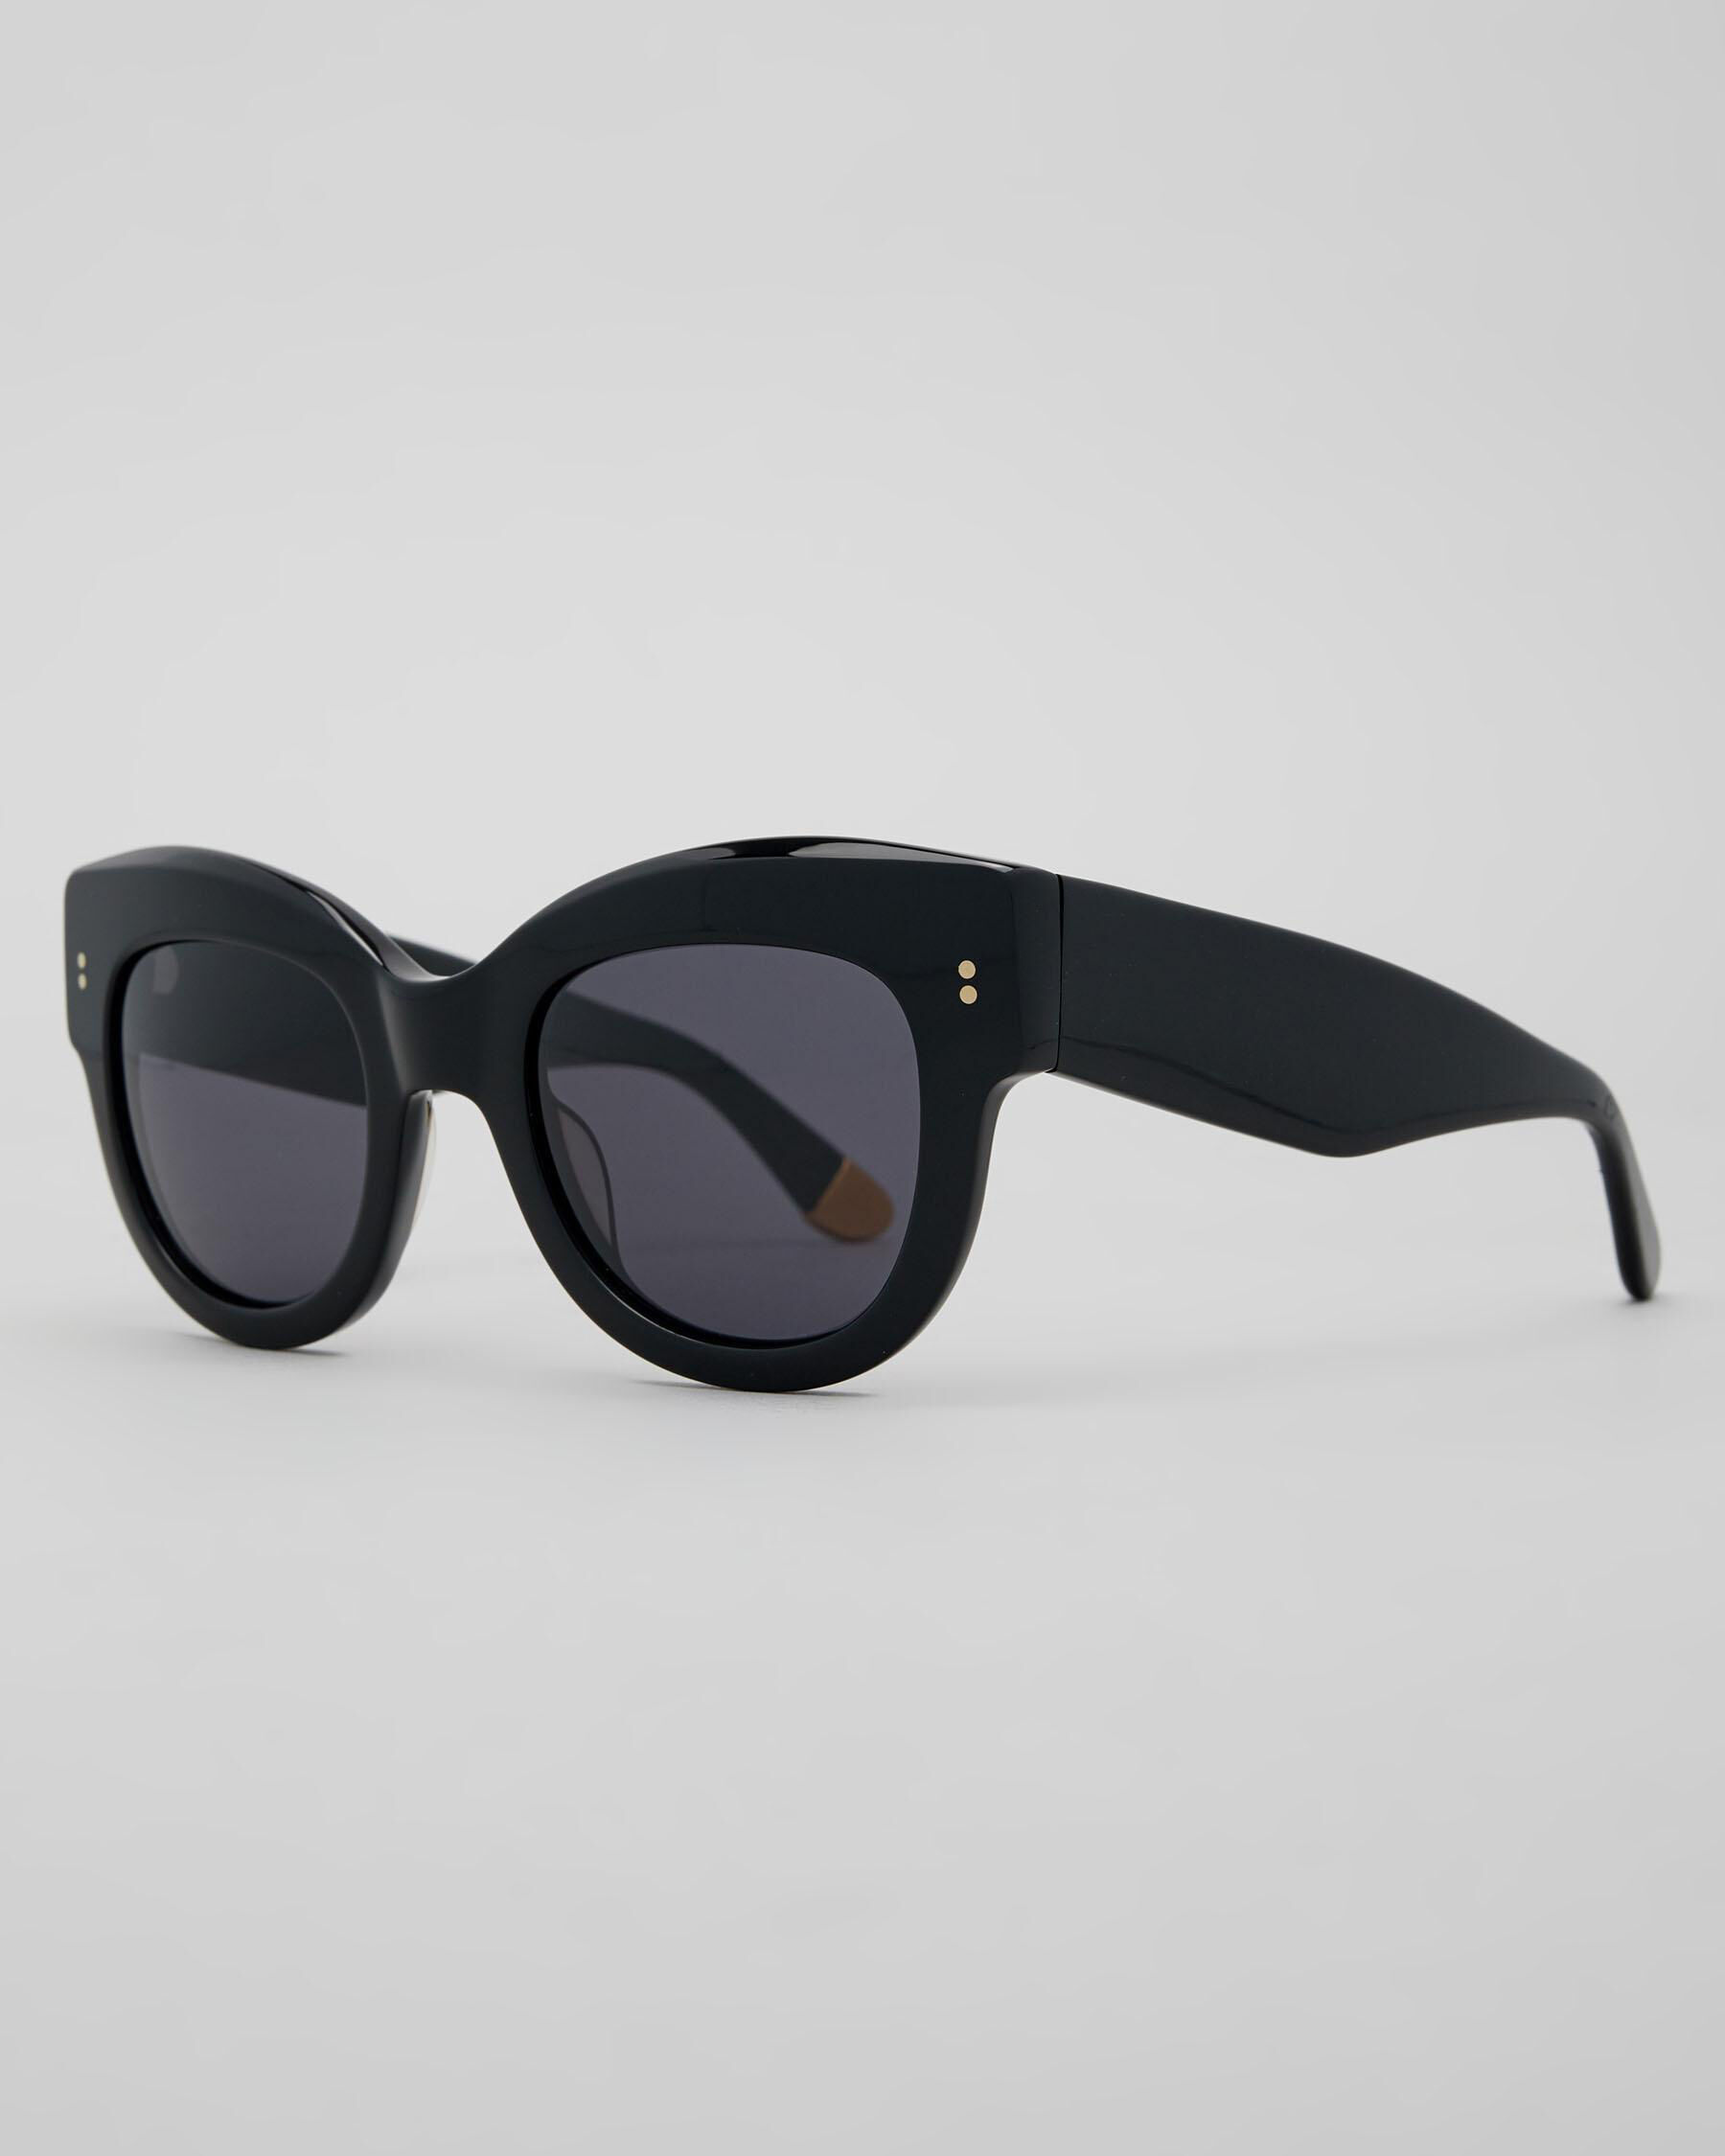 Sabre Nova Sunglasses In Black - FREE* Shipping & Easy Returns